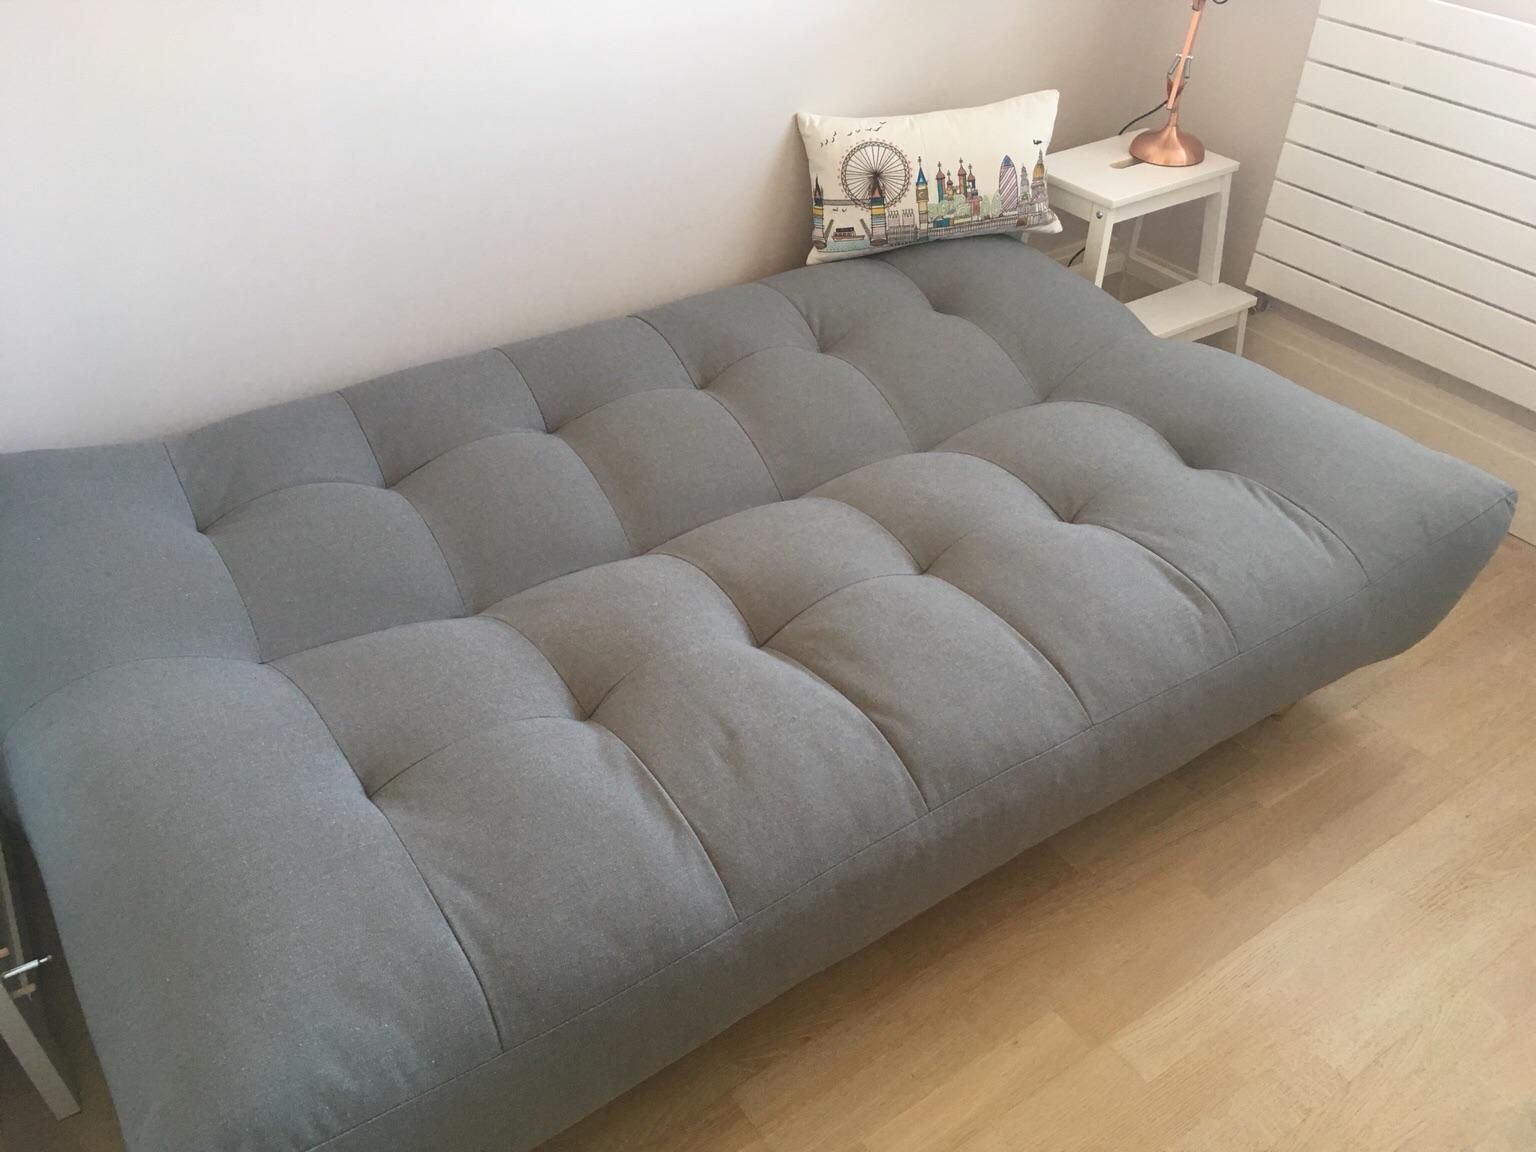 habitat france sofa bed